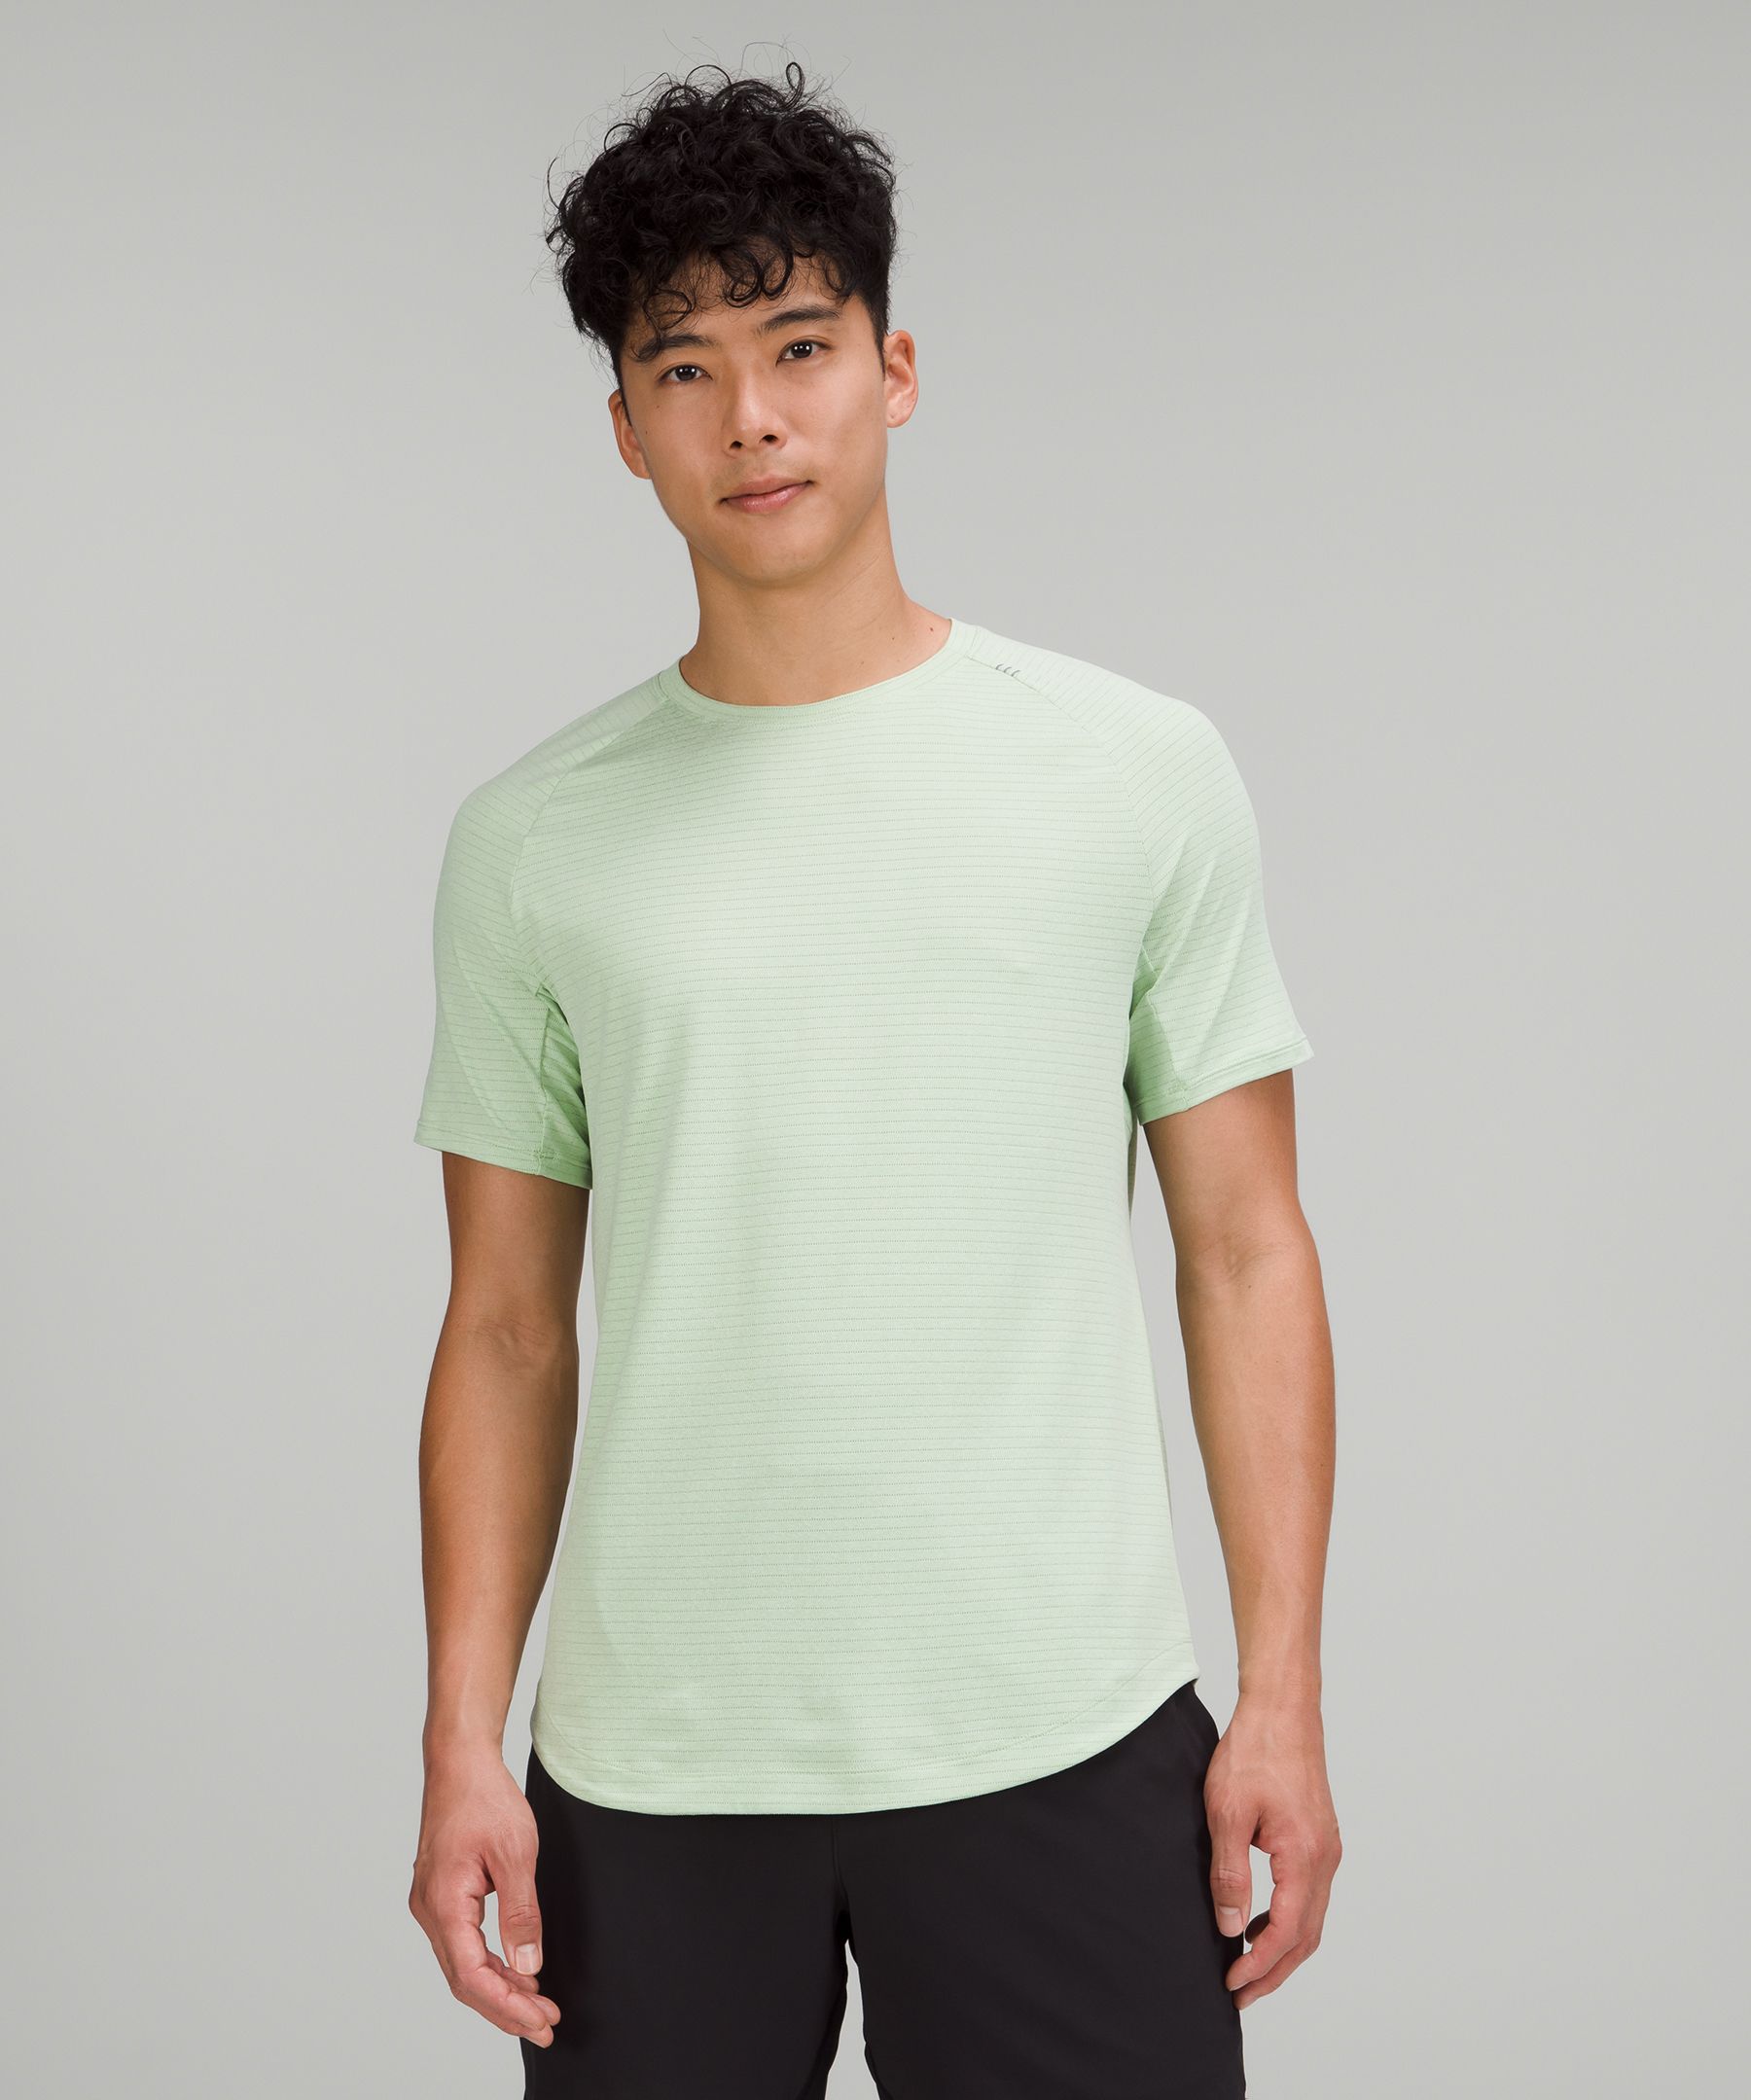 Drysense Training Short Sleeve Shirt | Men's Short Sleeve Shirts 